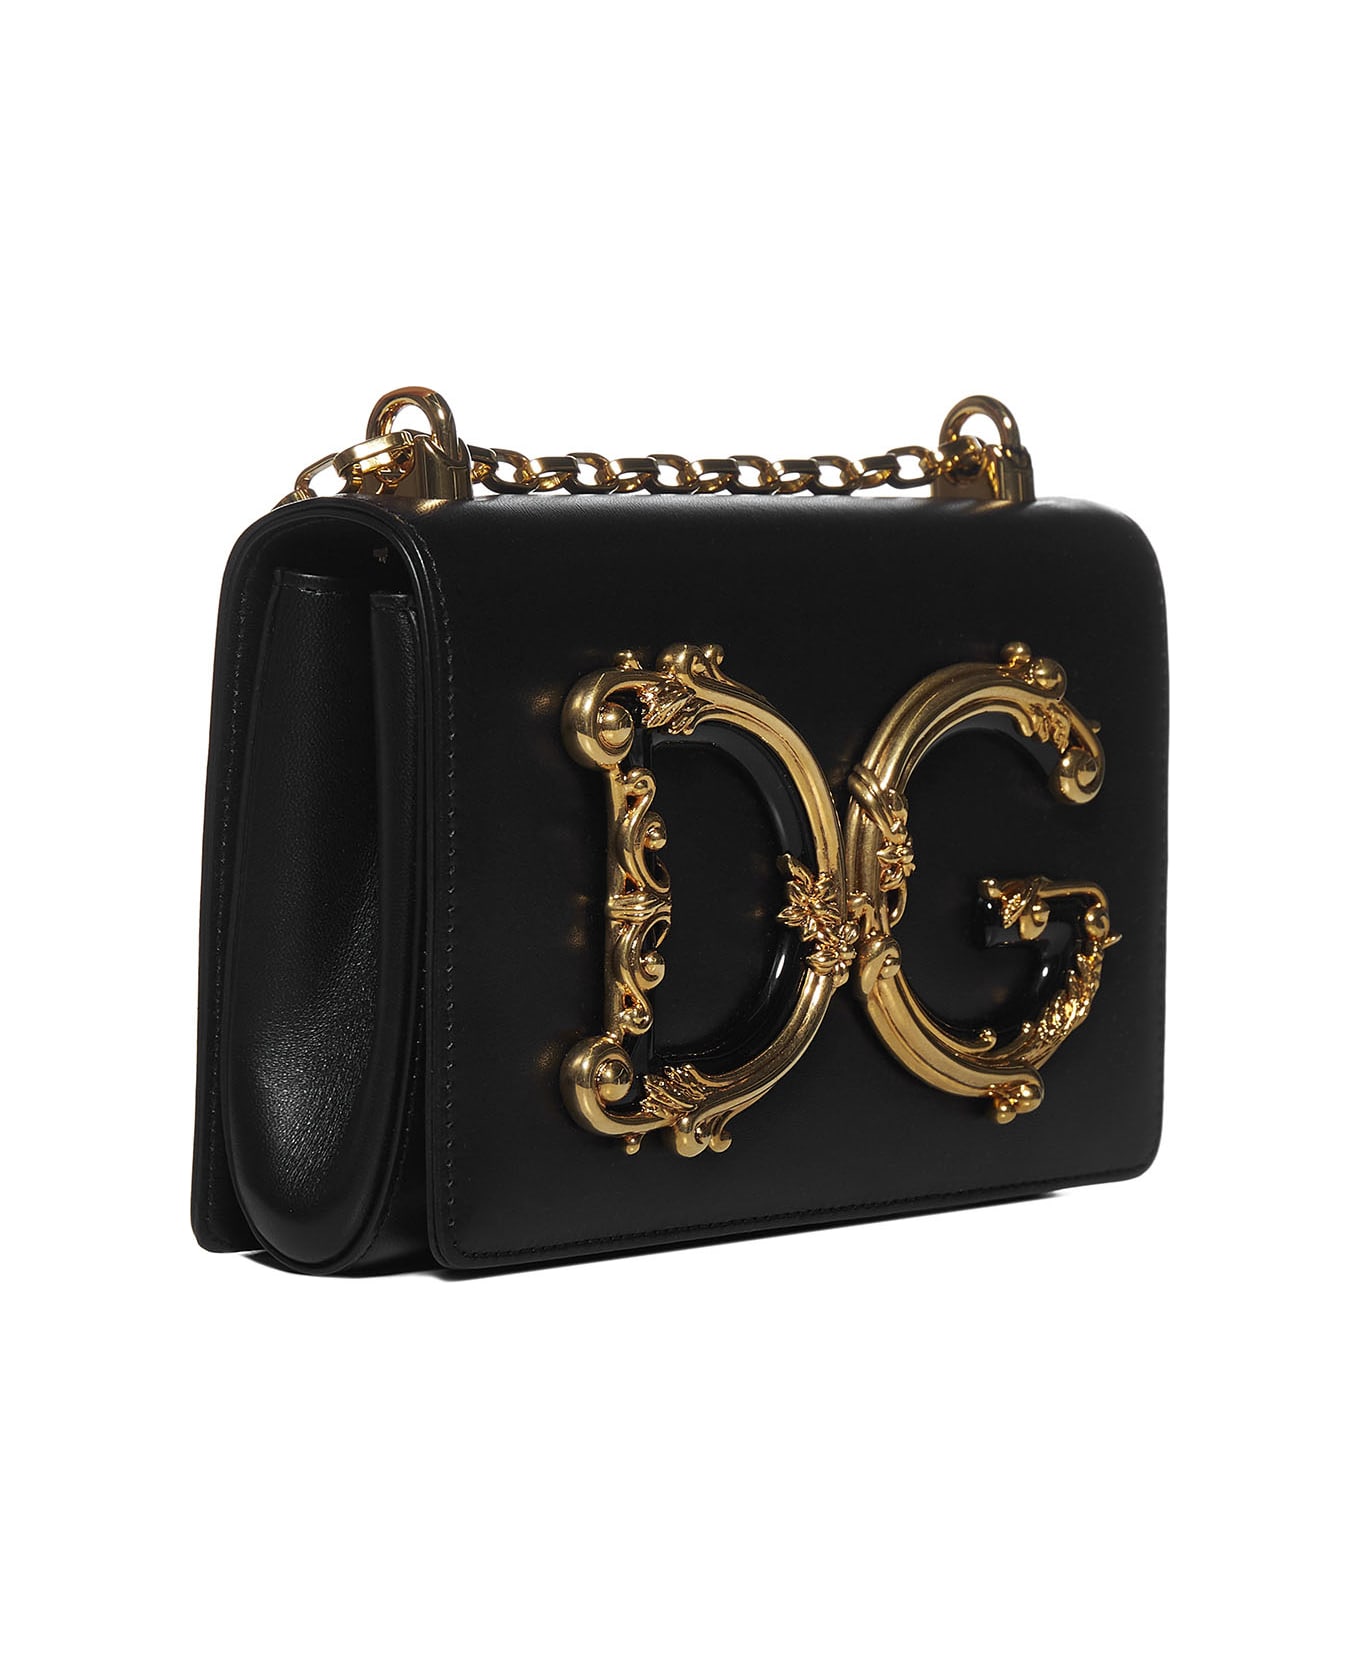 Dolce & Gabbana Dg Girls Bag - Black